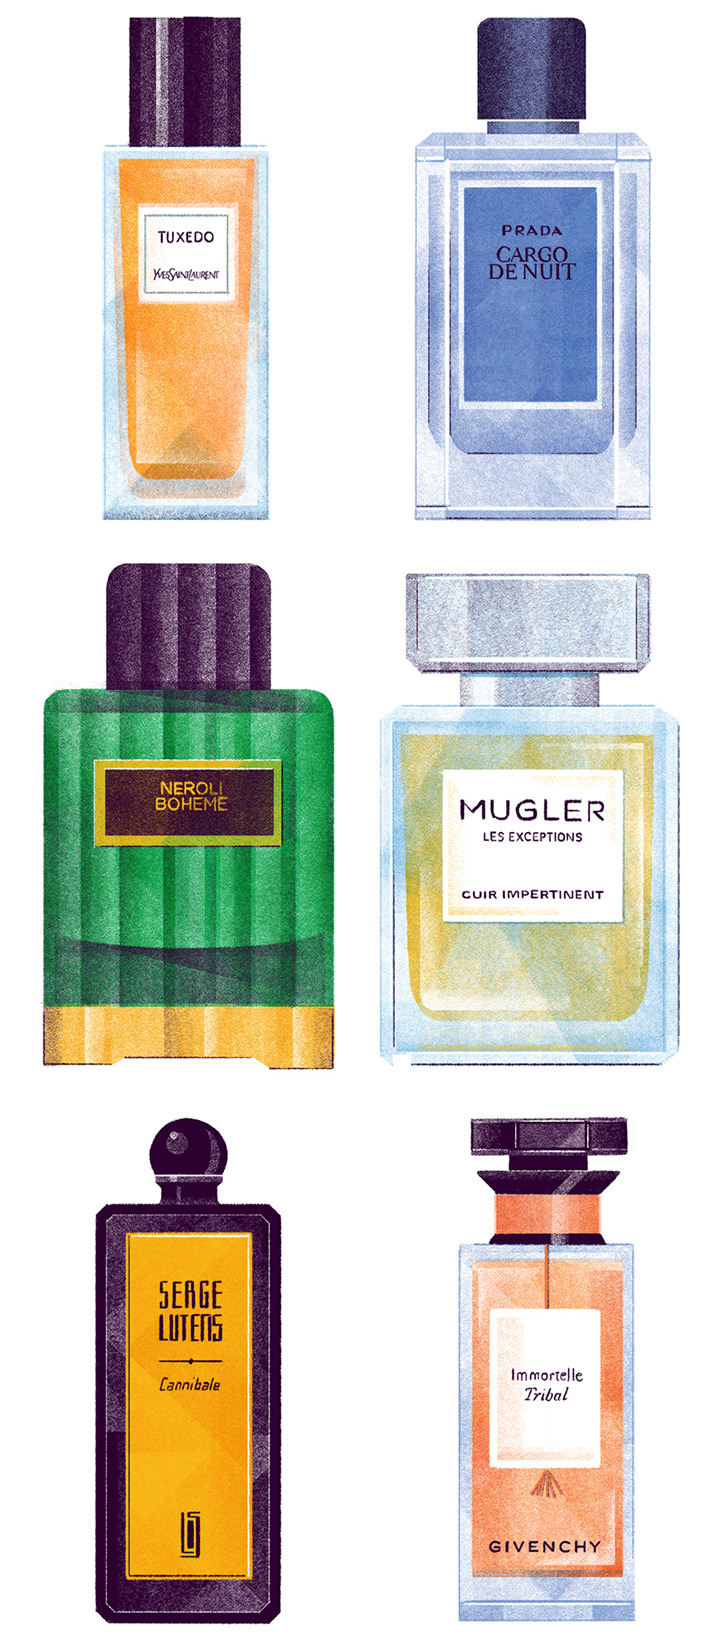 Tatiana Boyko, Tatiana Boyko textural, digital illustration of a series of perfume bottles.  